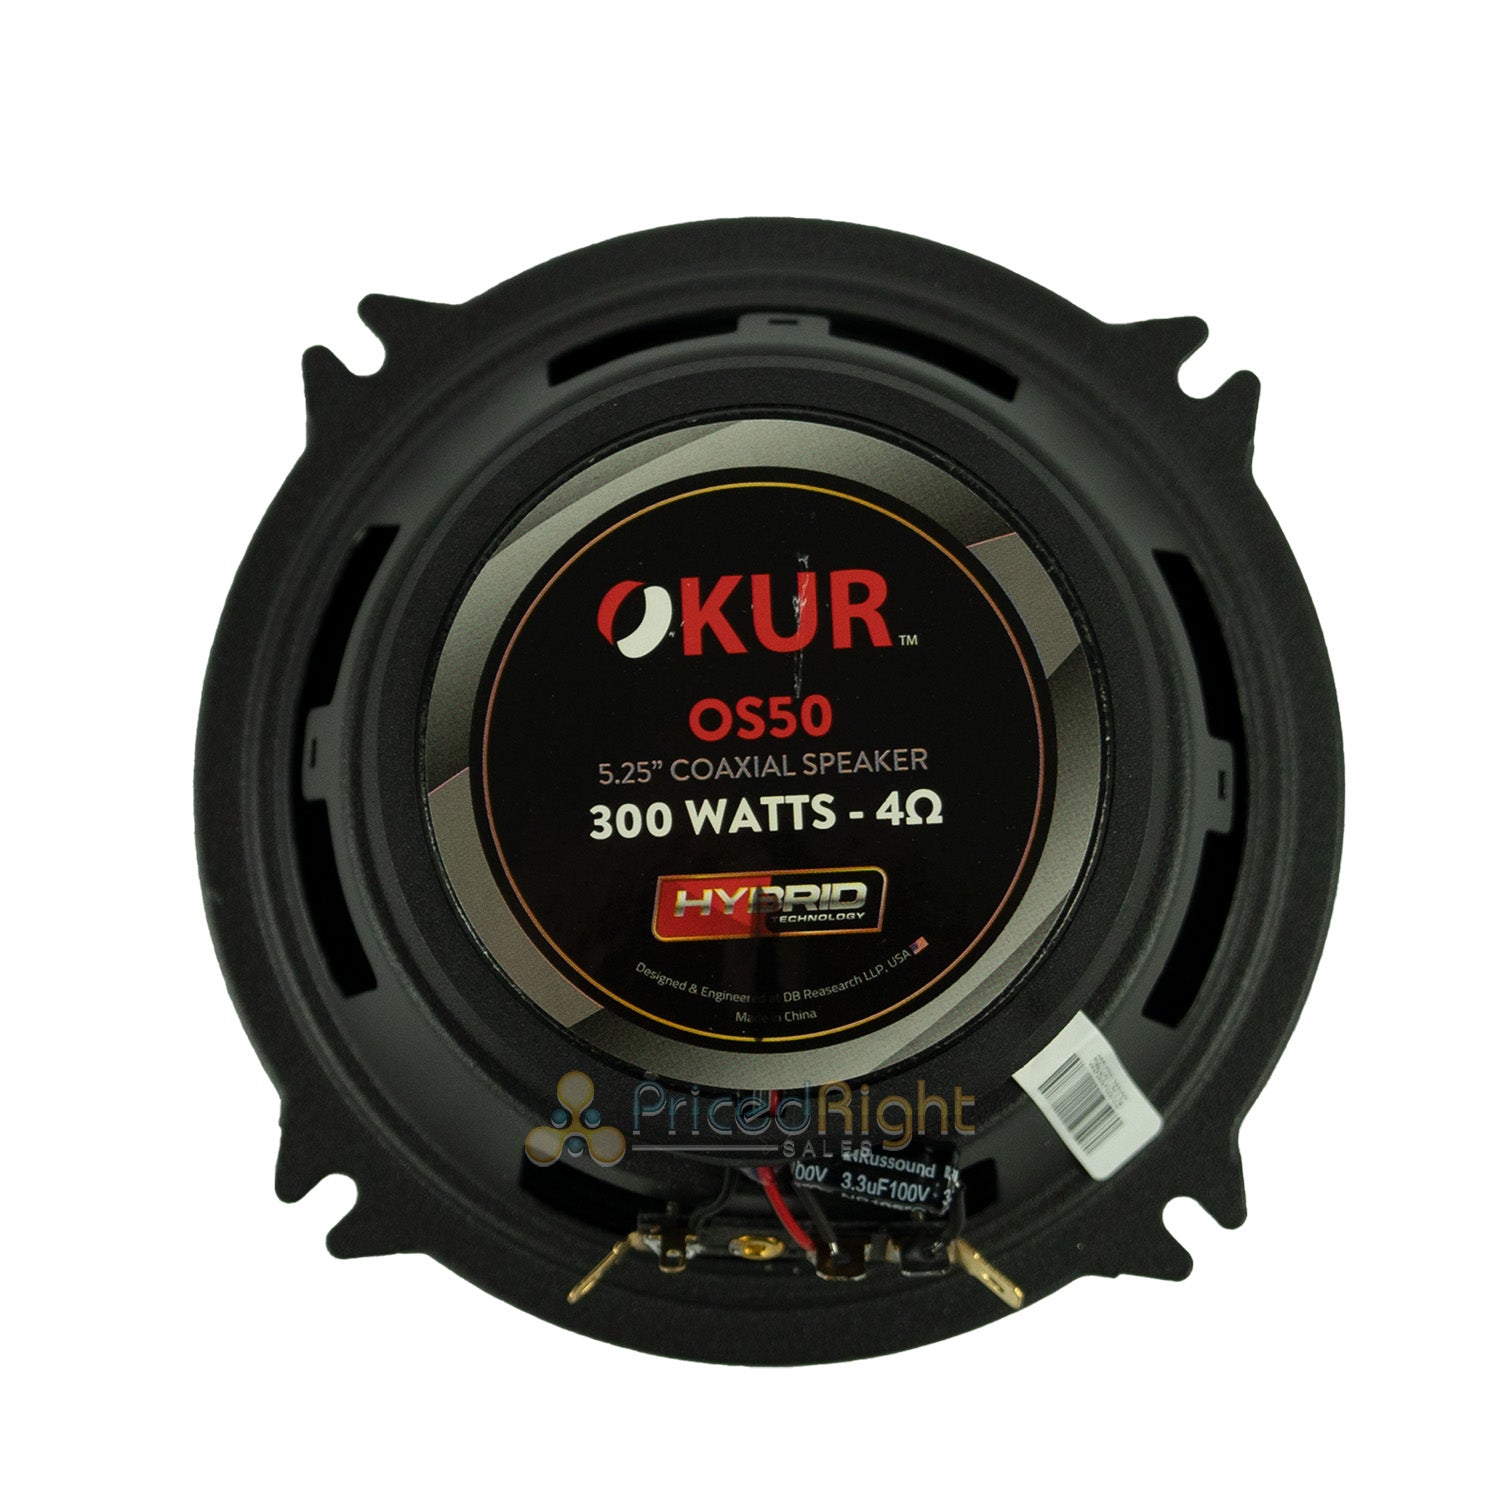 OKUR 5.25" Coaxial Speaker 300 Watts 4 OHM1" Voice Coil Hybrid Technology OS50